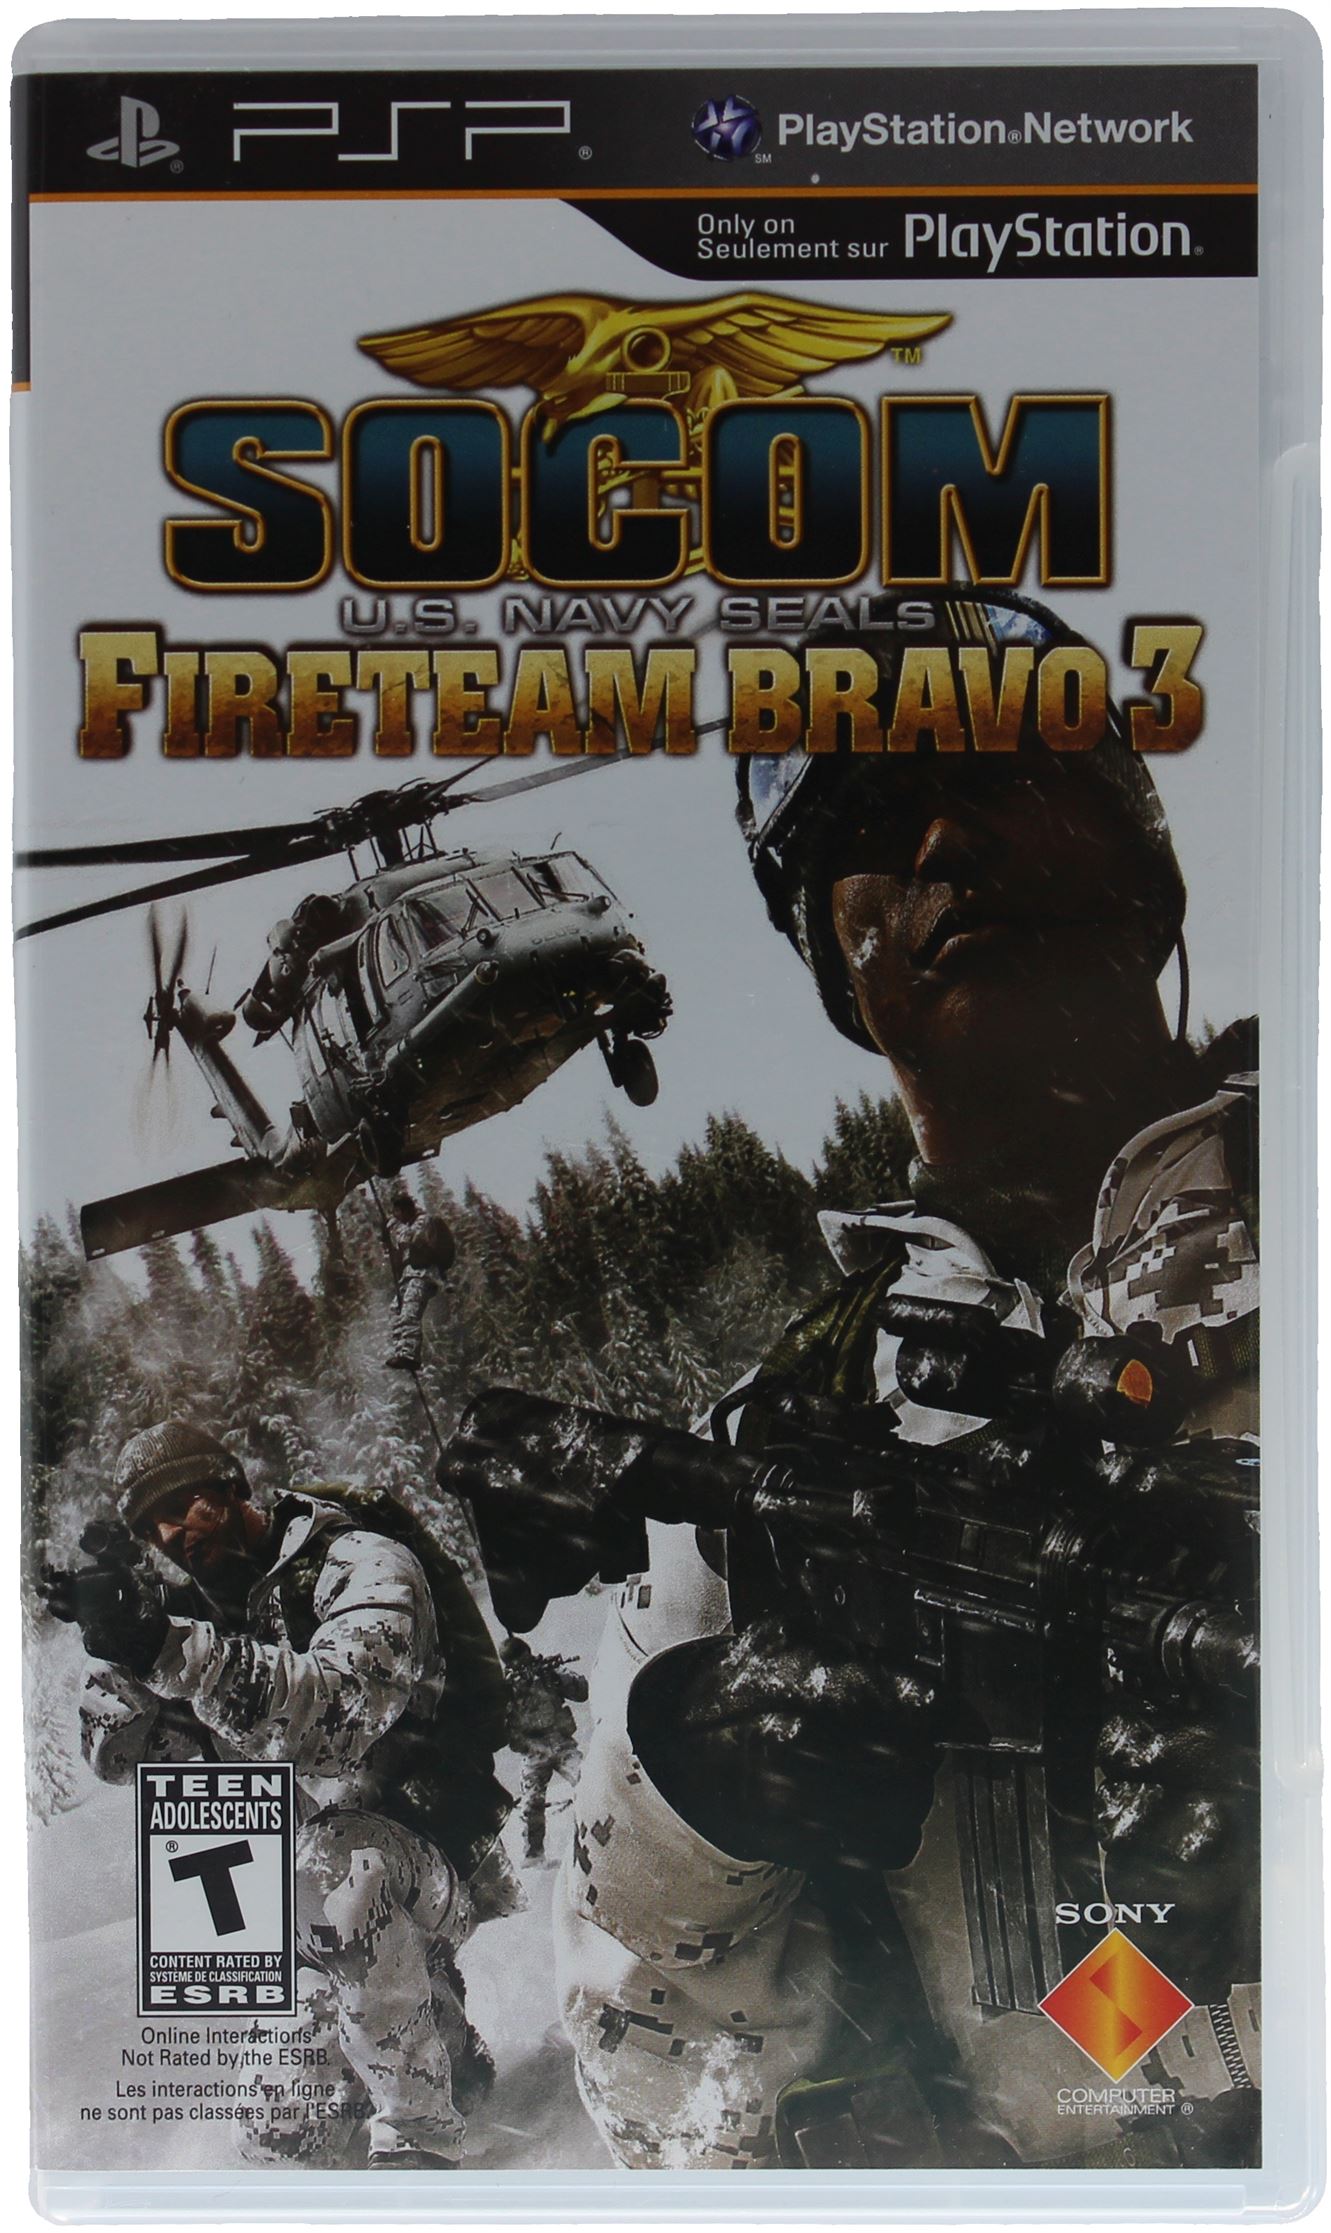 SOCOM U.S. Navy SEALs: Fireteam Bravo 3 – Retro North Games